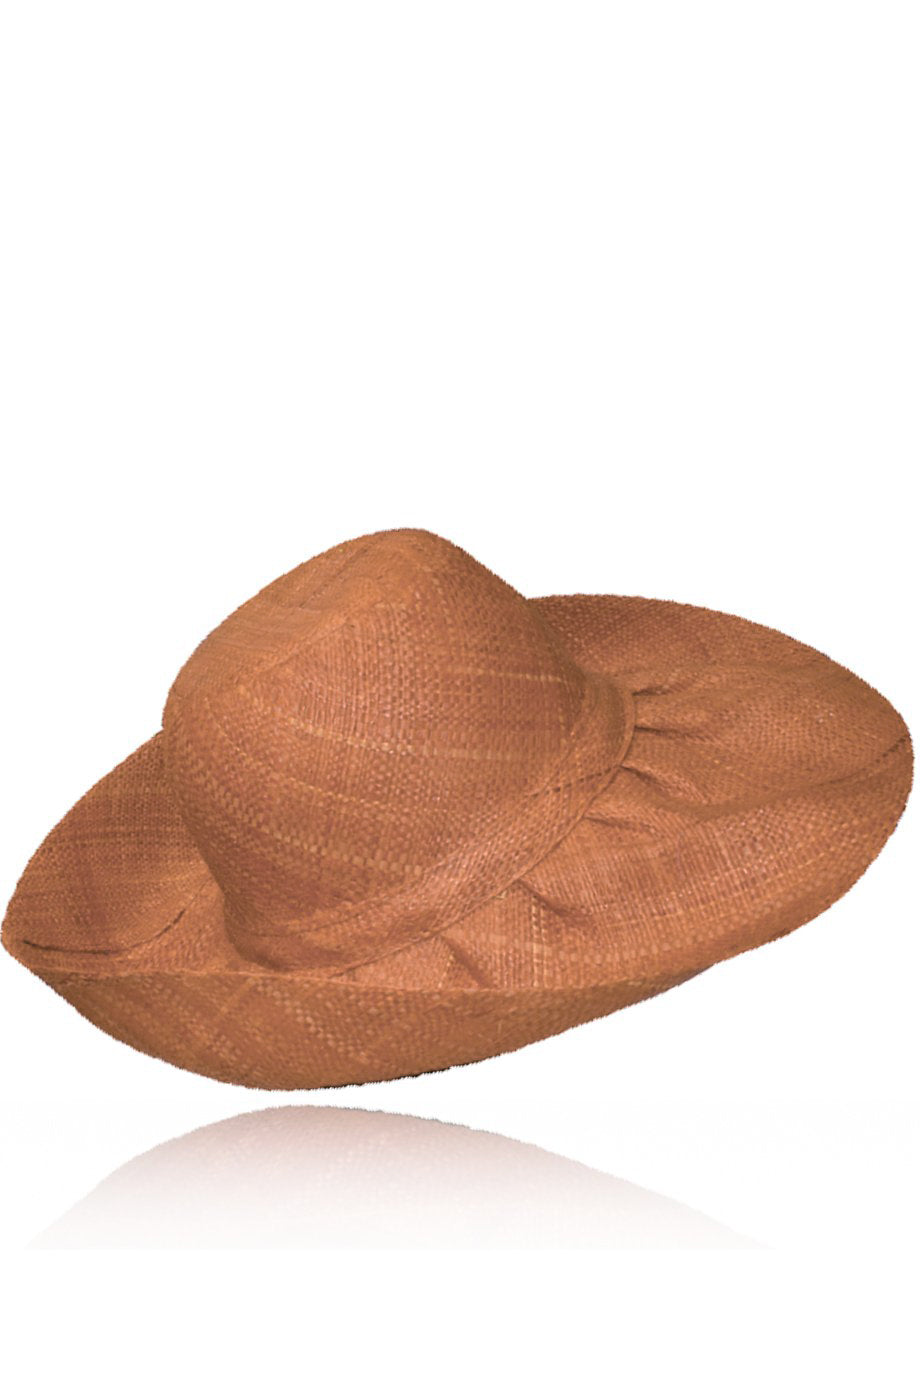 Kenzie Handmade Wide Madagascar Hat in Light Brown